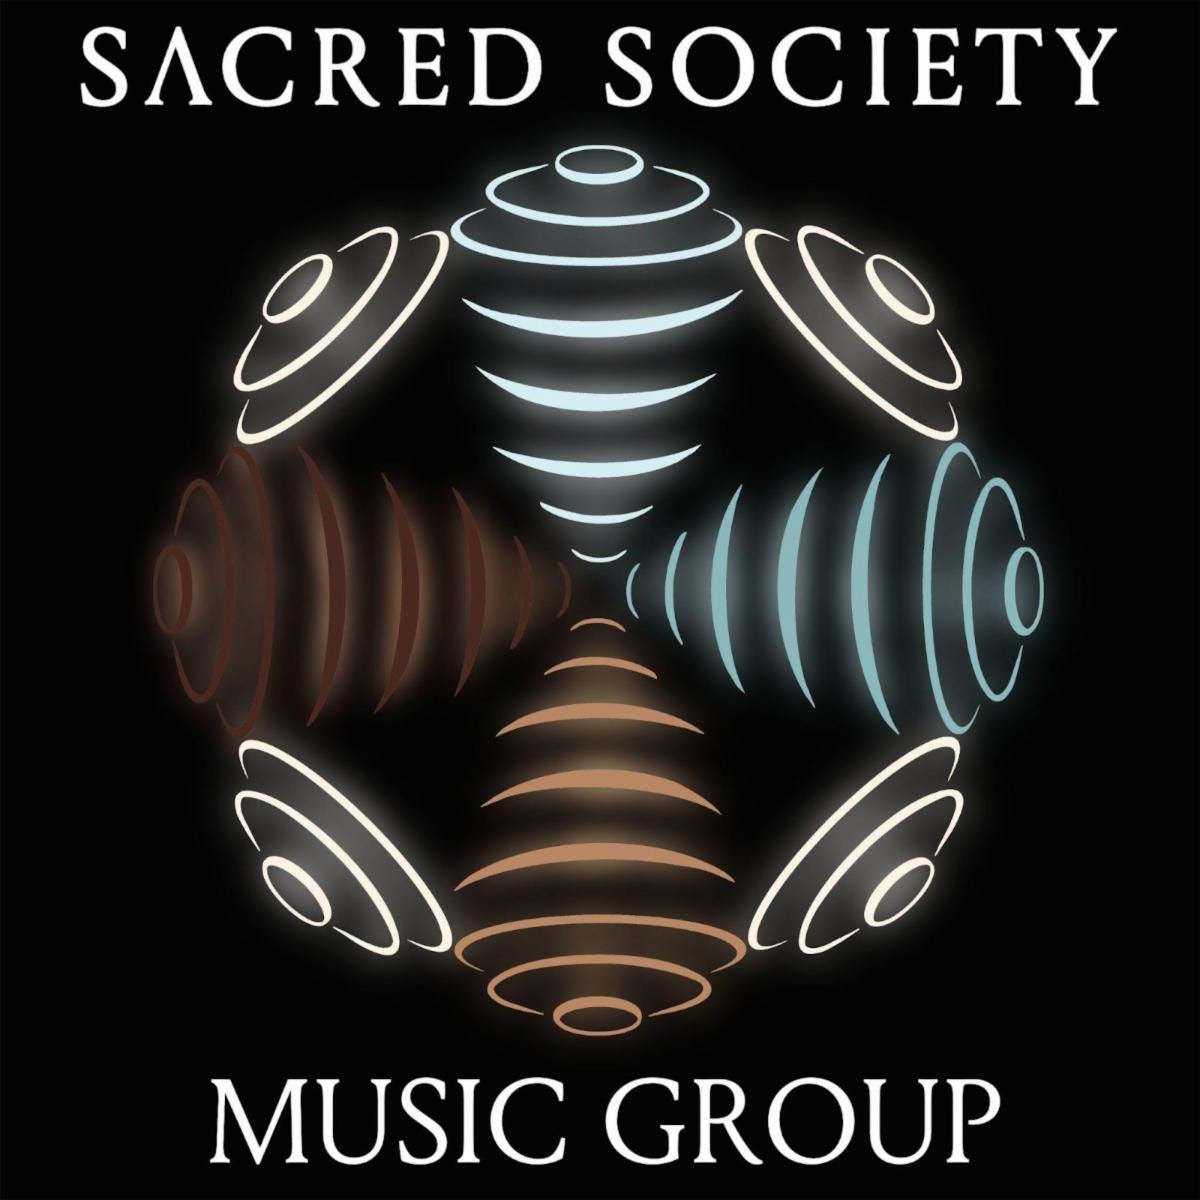 Introducing Sacred Society Music Group